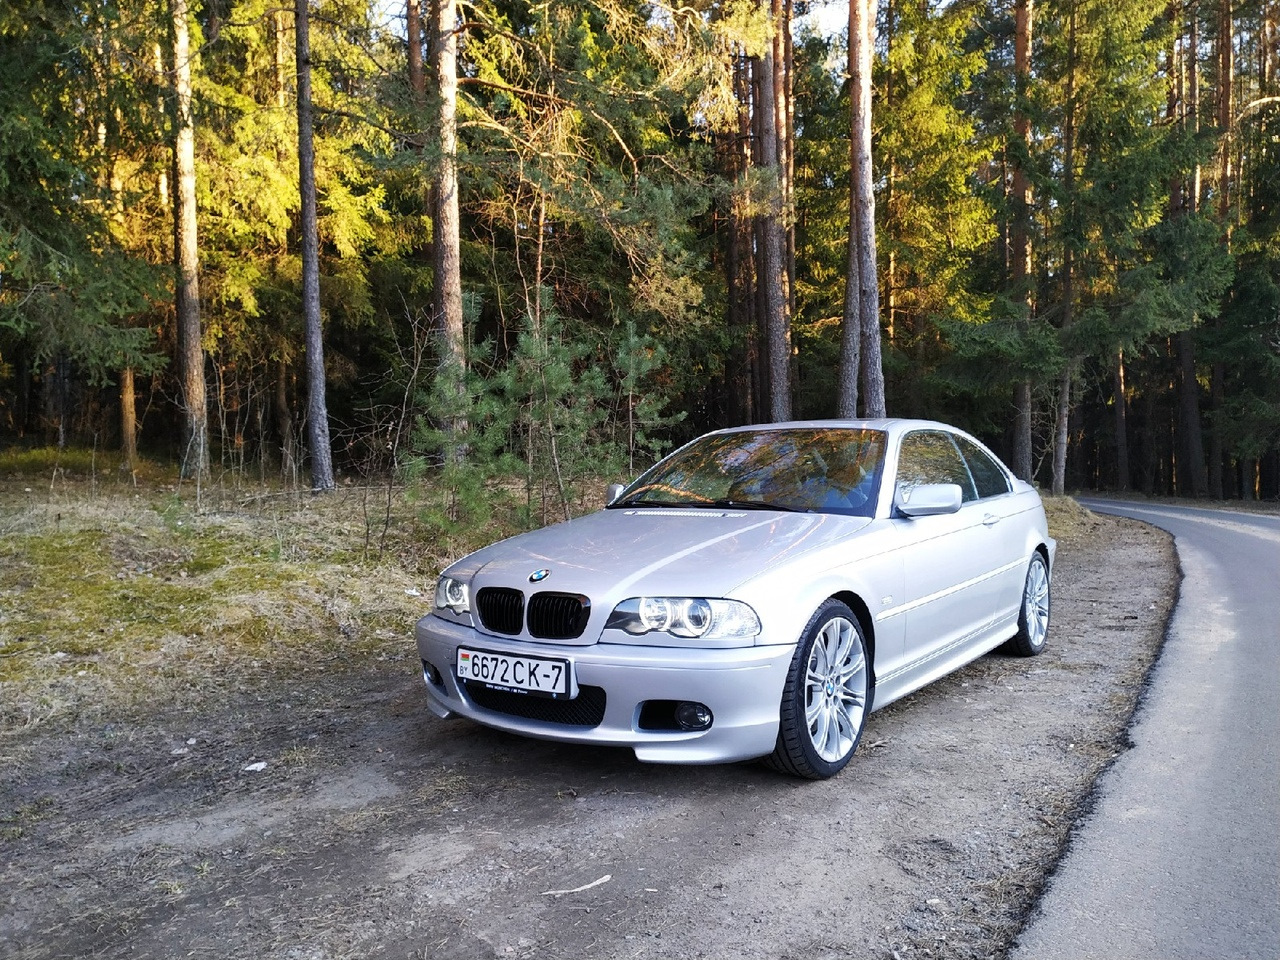 E46 coupe. BMW e46 Coupe. BMW 3 e46 Coupe. BMW e46 купе. BMW e46 купе 2001.